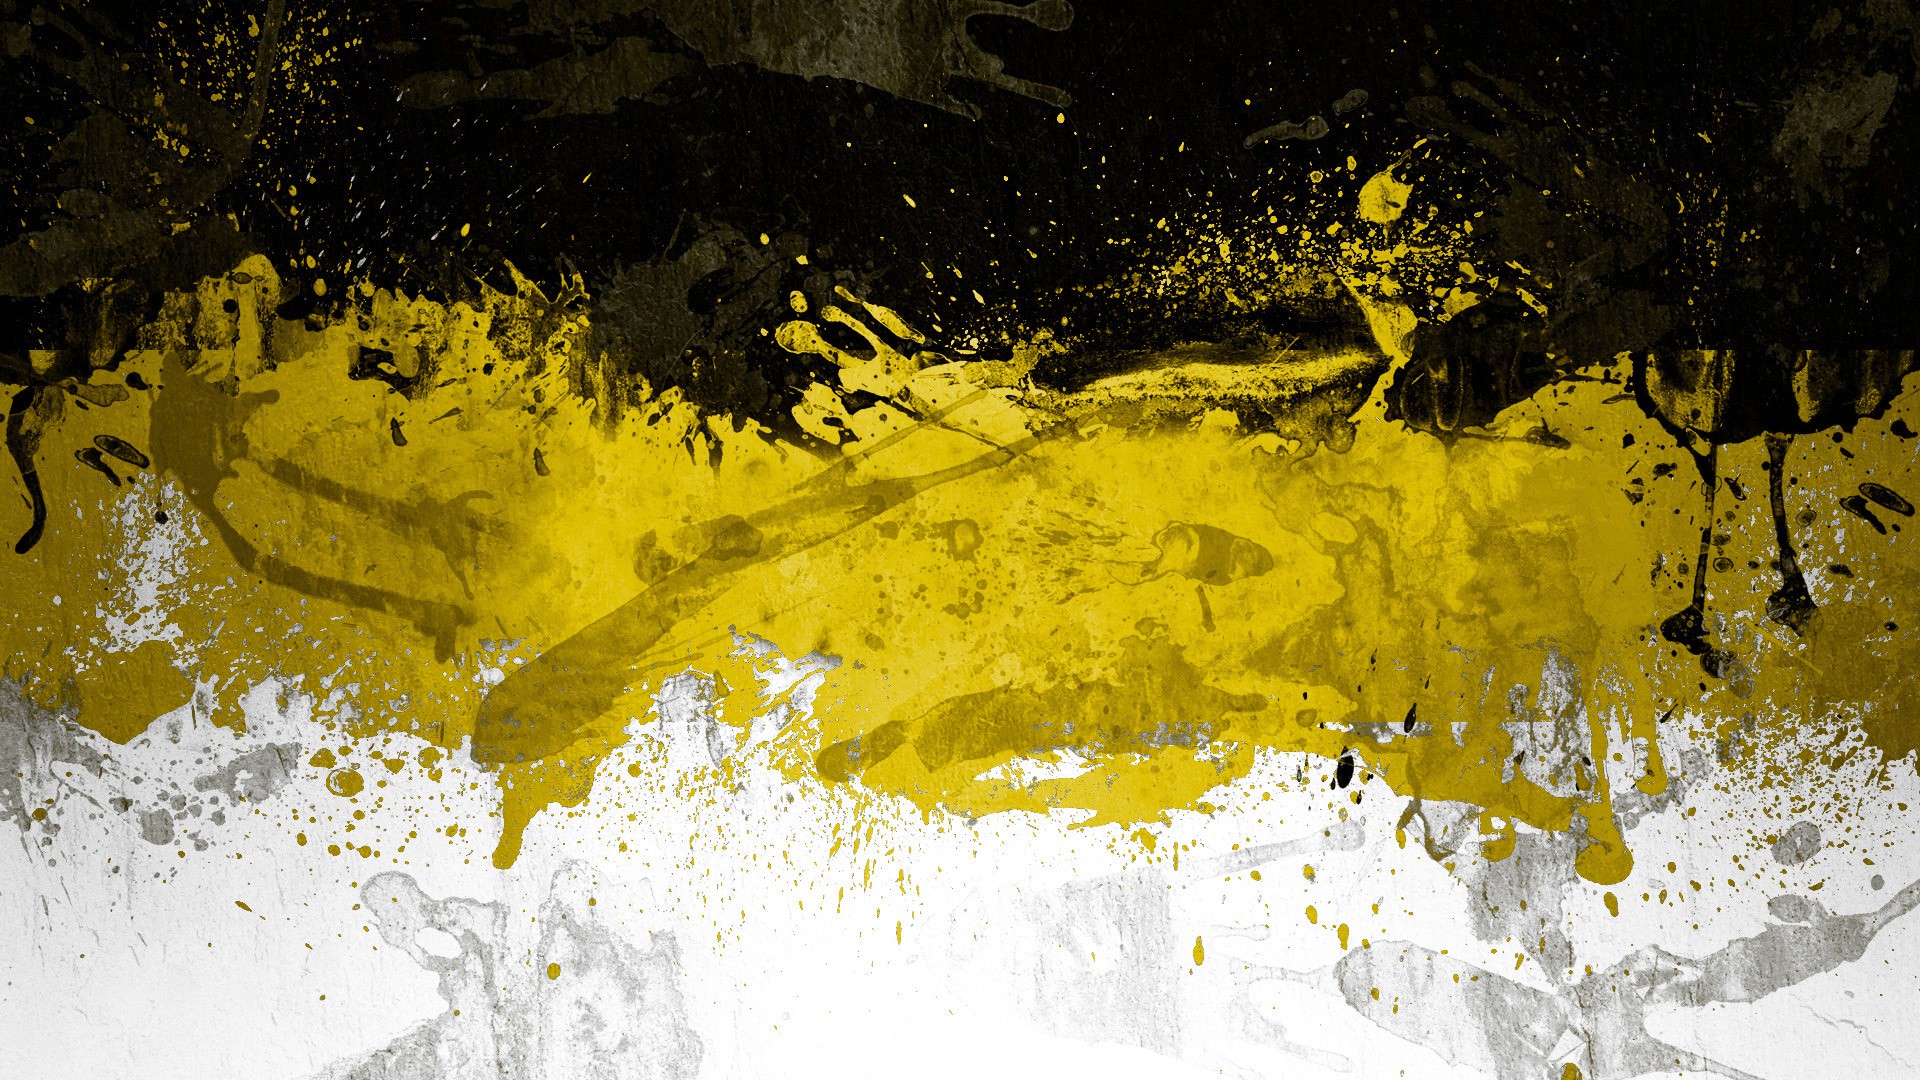 Black White And Yellow Wallpaper ~ CACOSDAFAP